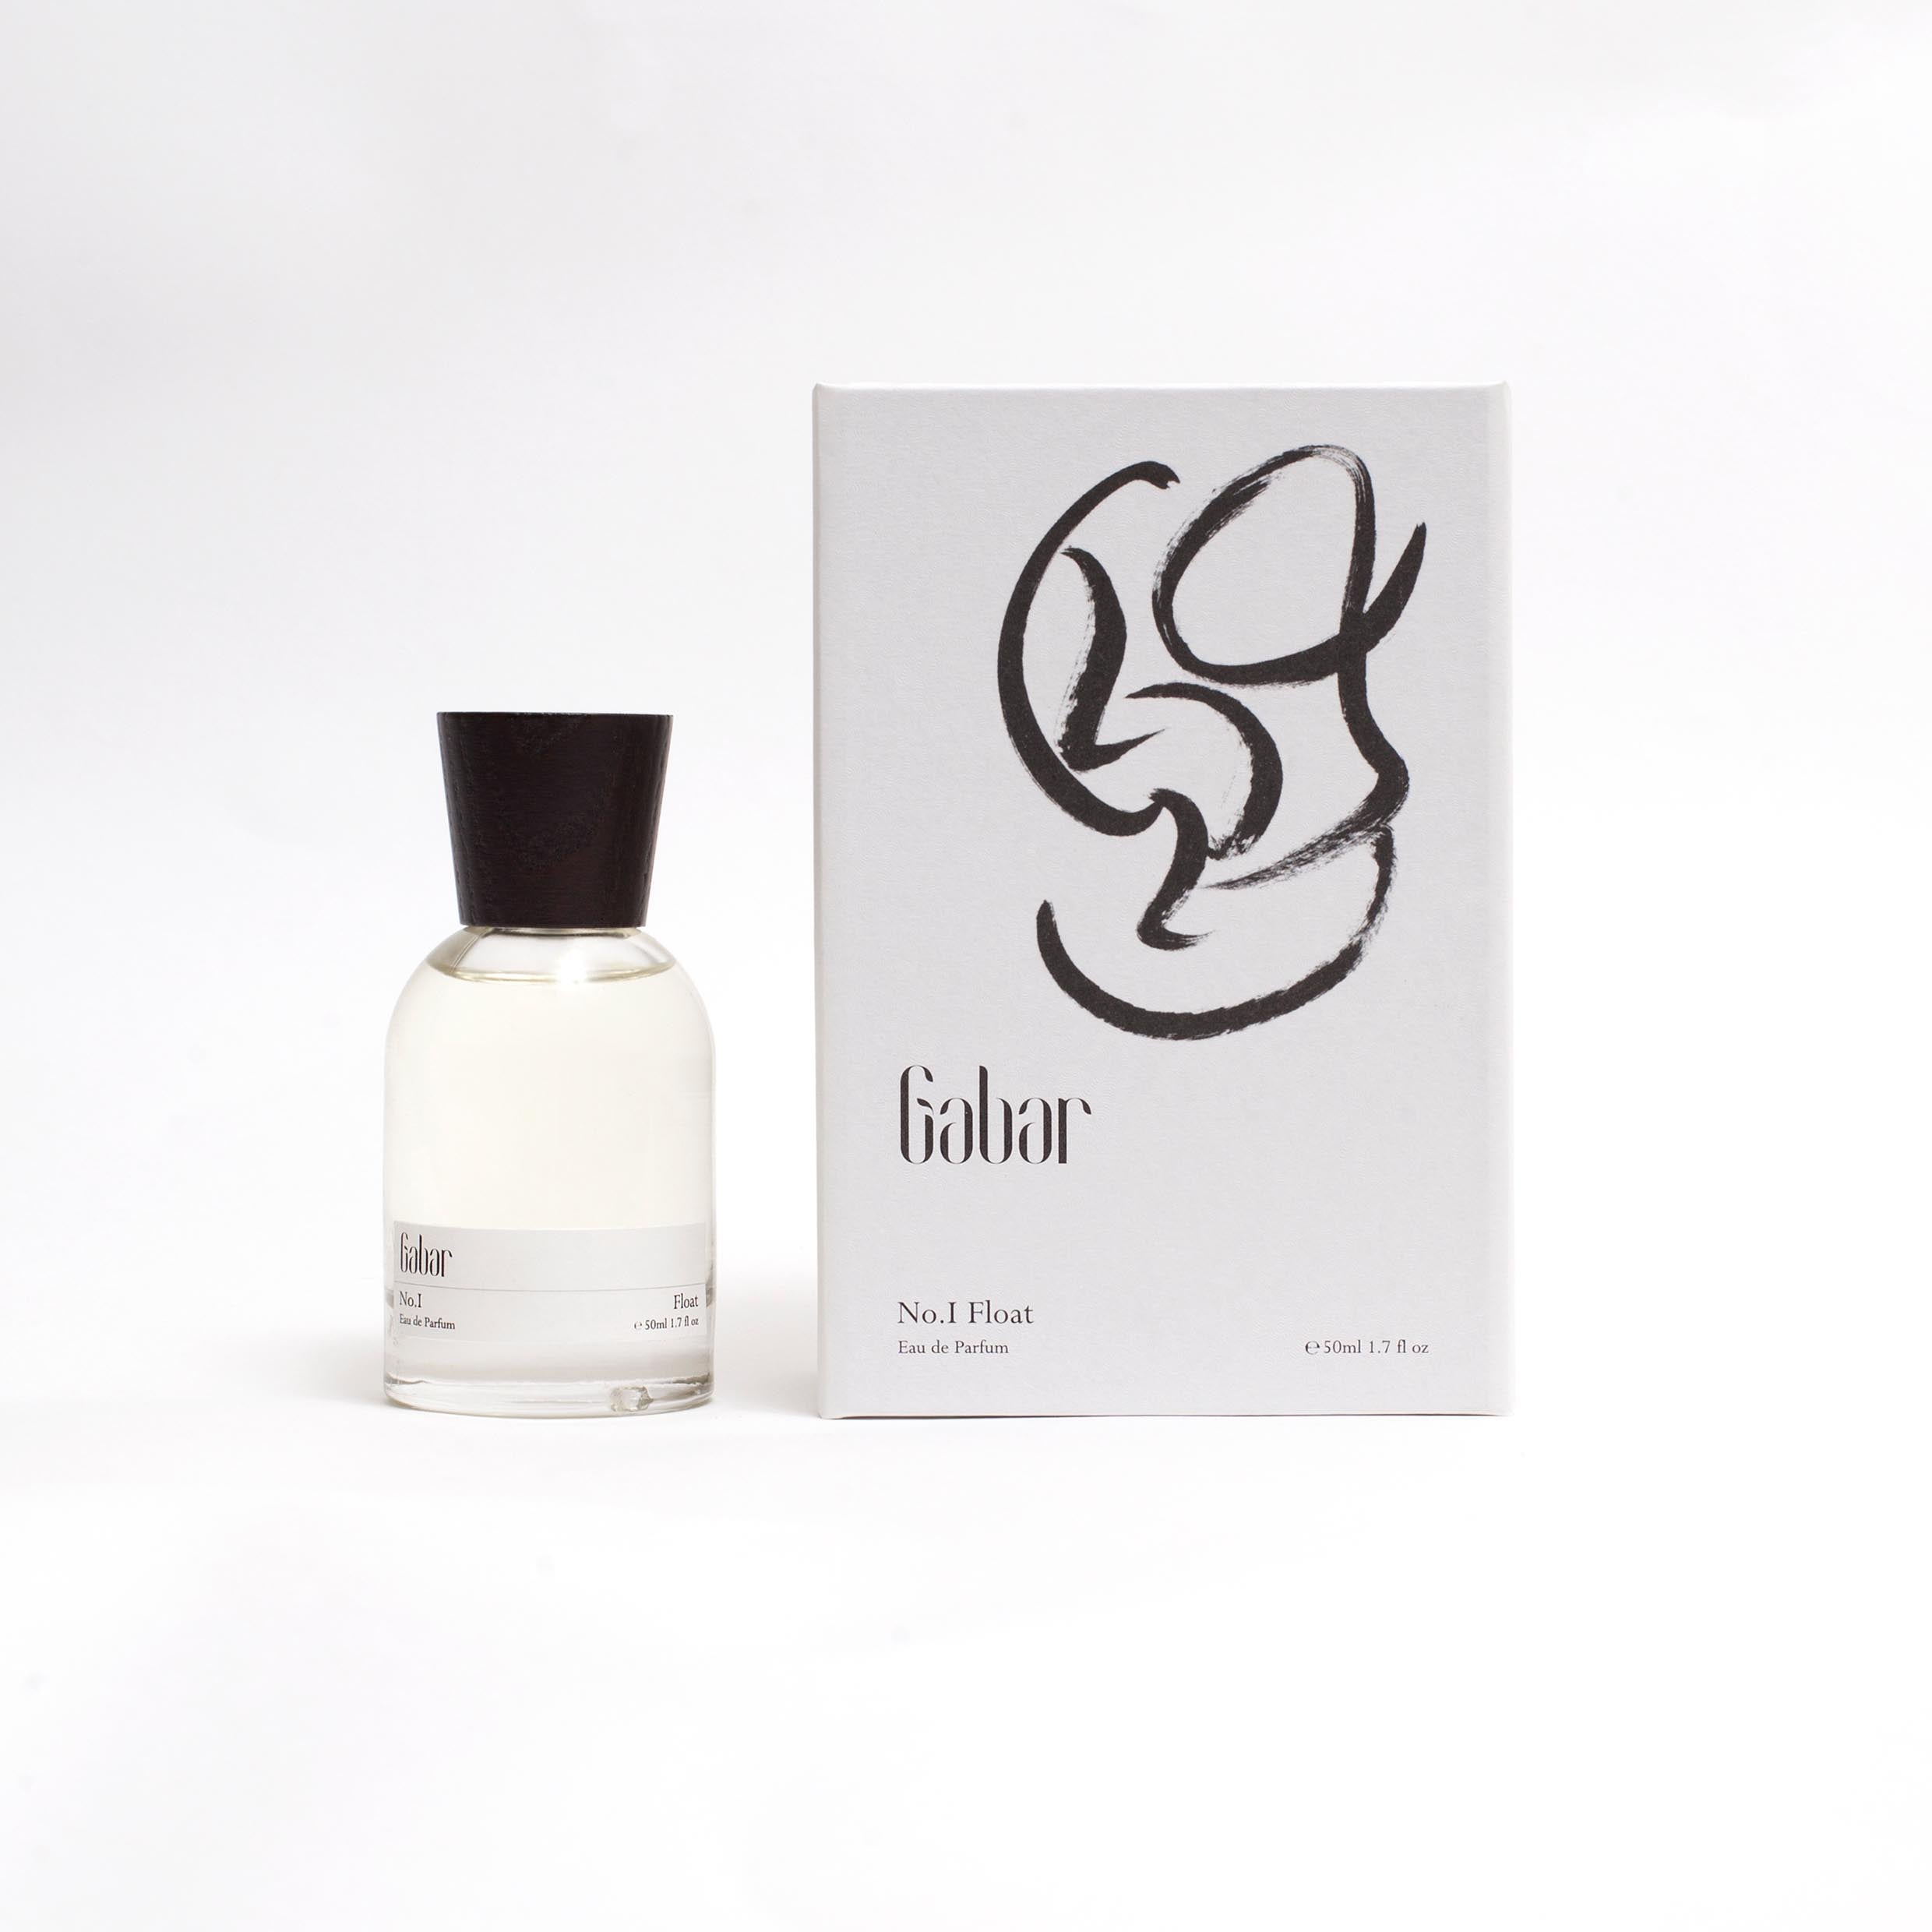  No.1 Float 50ml Eau de Parfum Bottle and Box by Gabar